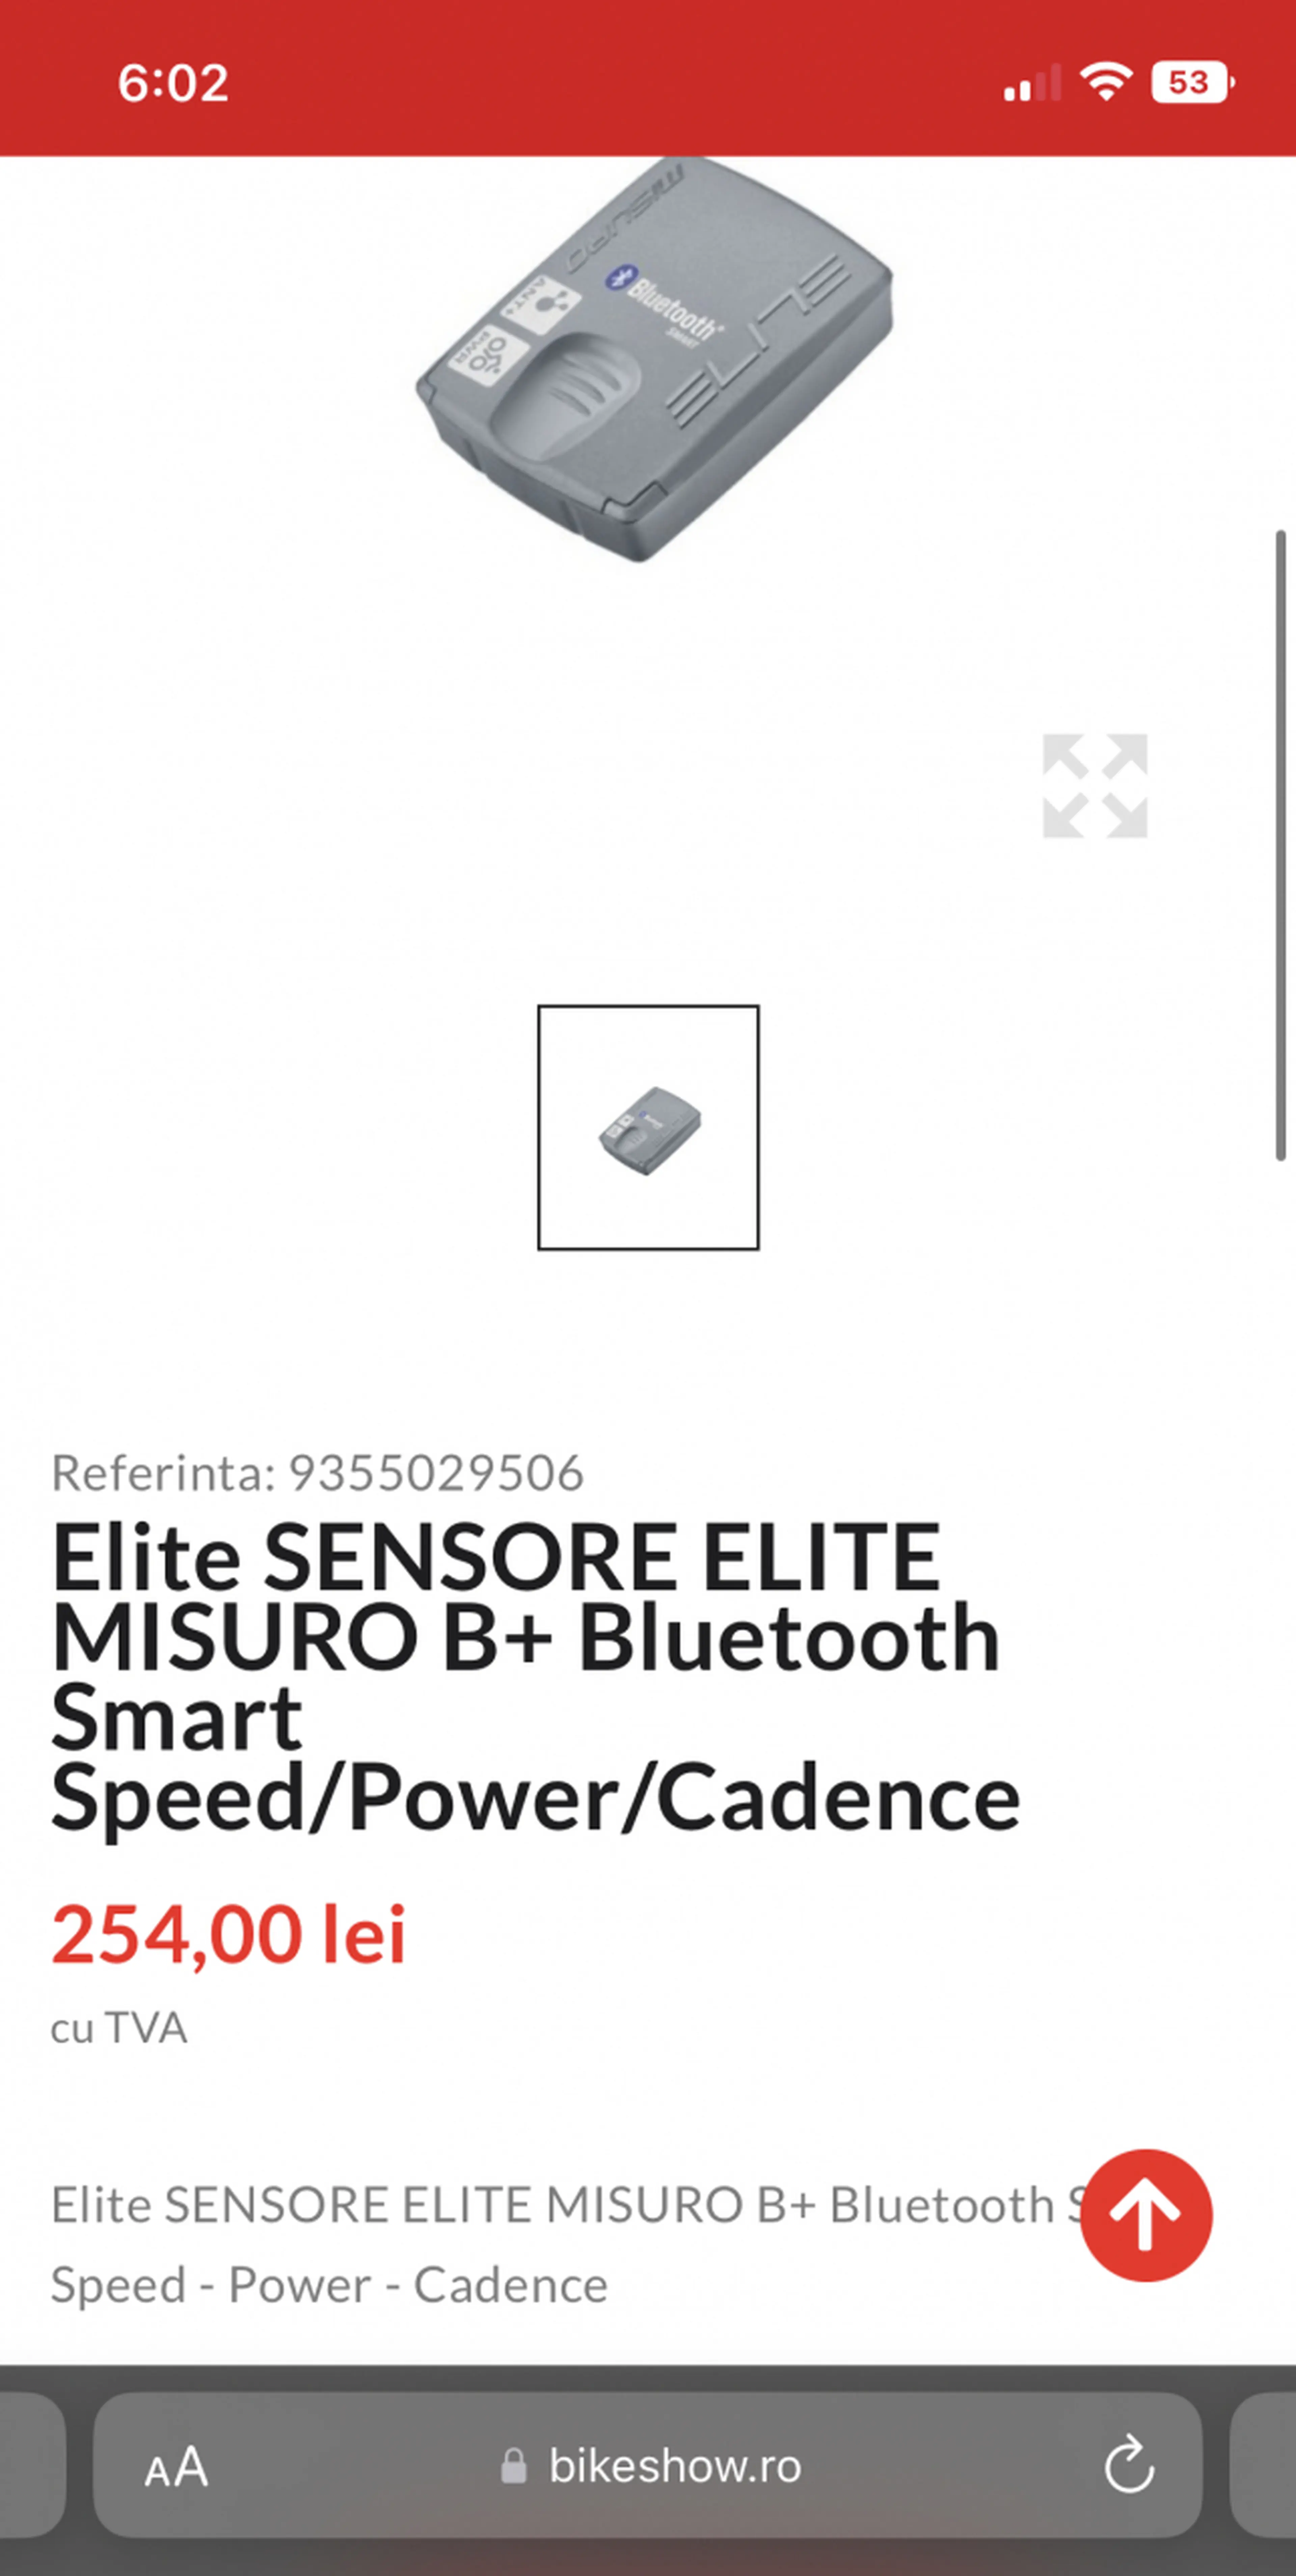 2. Elite SENSORE ELITE MISURO B+ Bluetooth Smart Speed/Power/Cadence